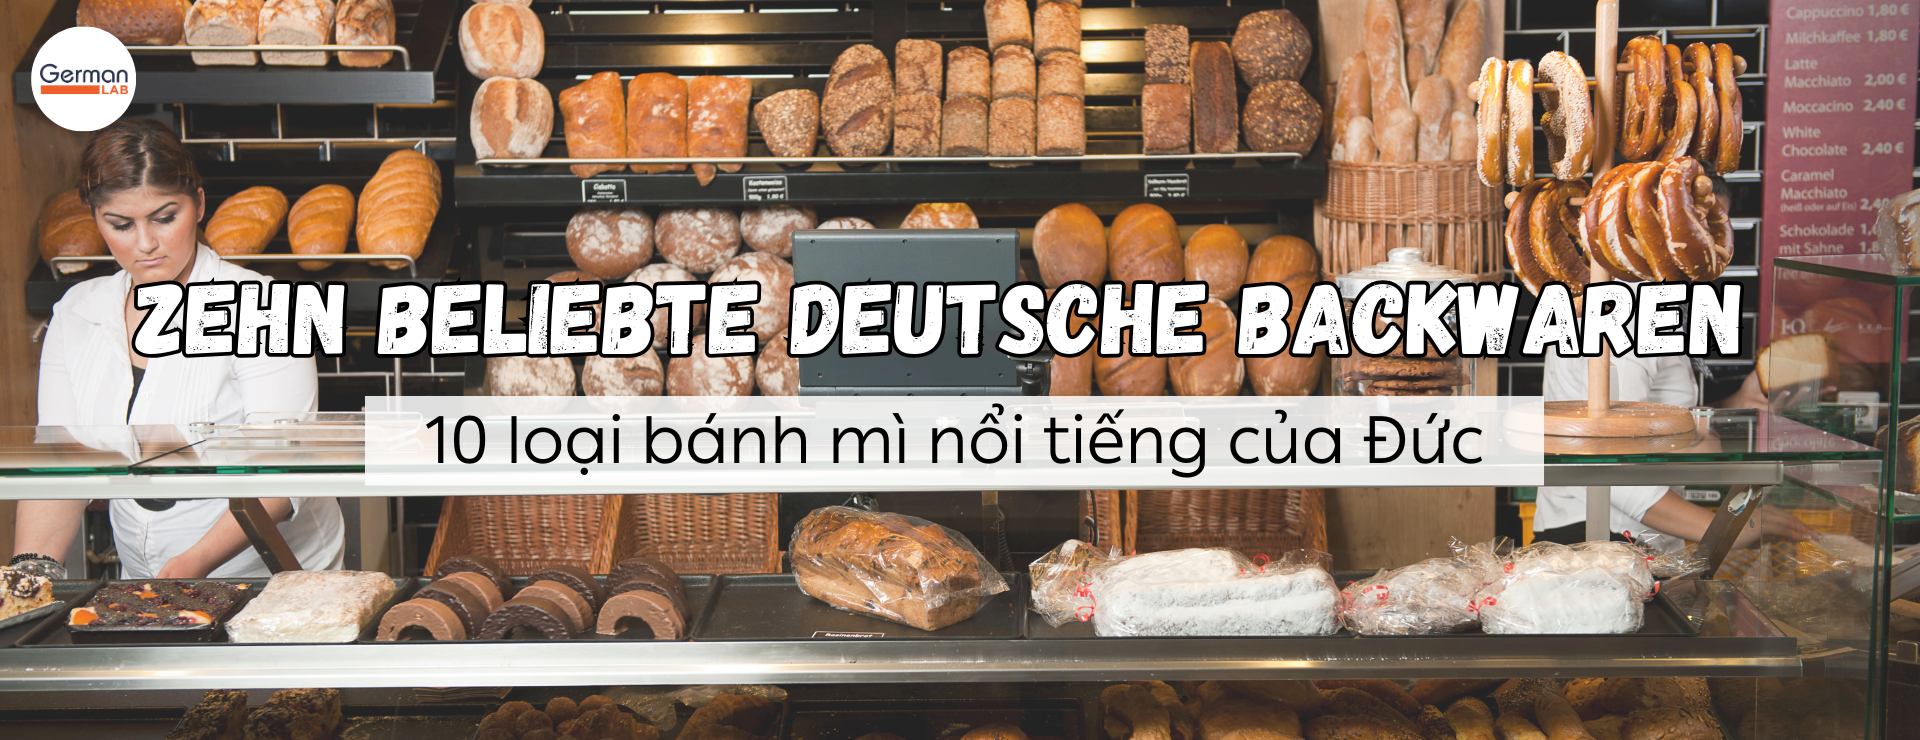 Zehn Beliebte Deutsche Backwaren - 10 loại bánh mì nổi tiếng của Đức